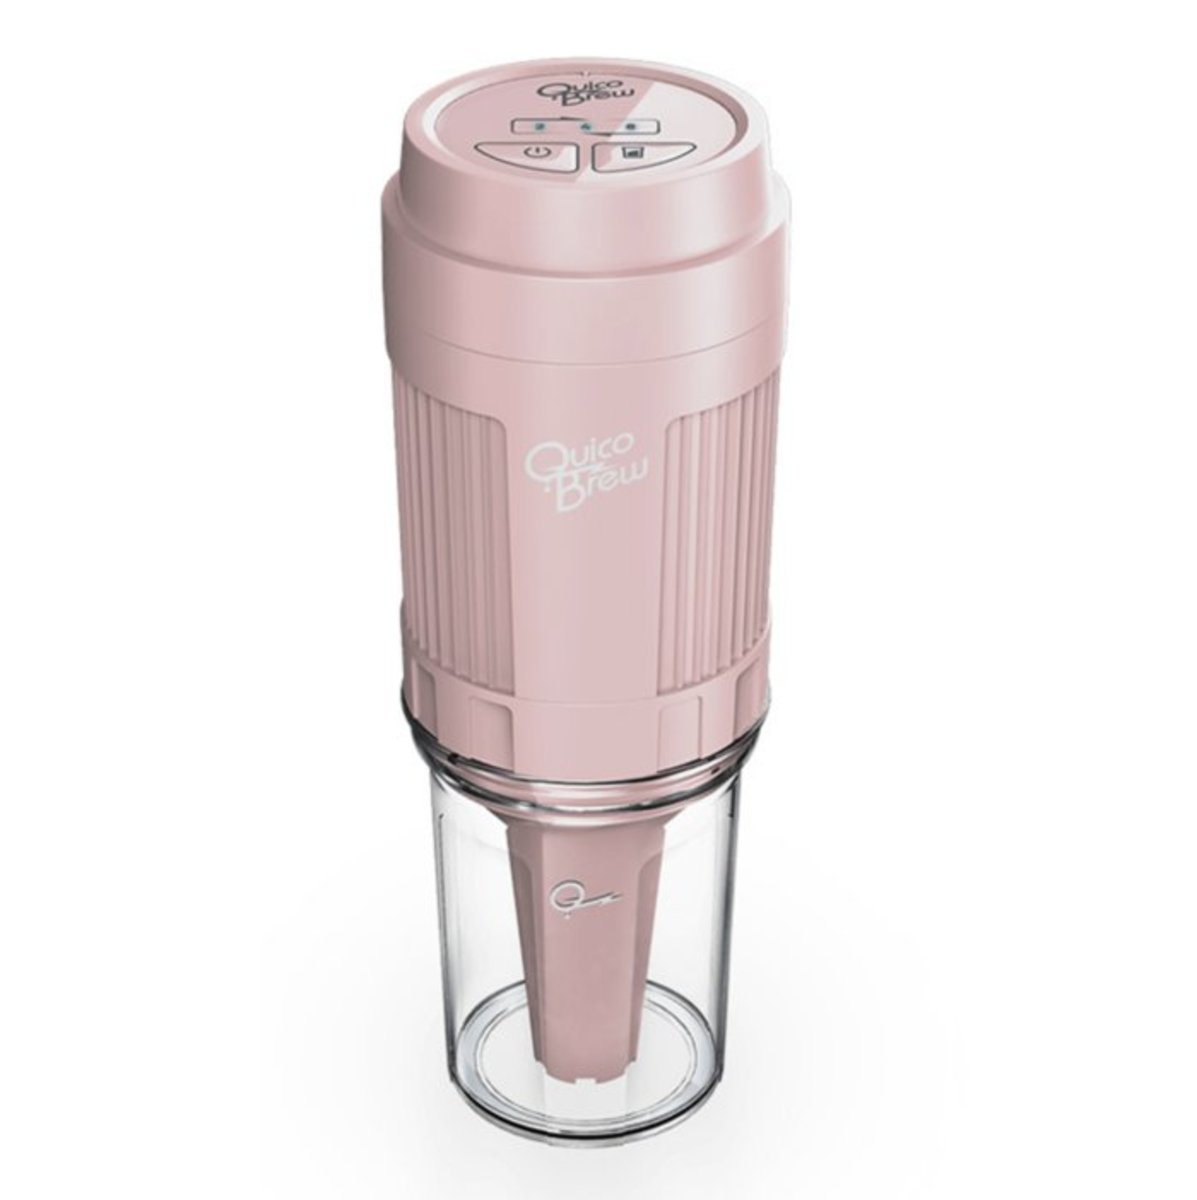 Quico - BREW Breathing Filter Bottle｜Cold Brew Brewing｜Cold Brew Coffee Machine-Sakura Powder